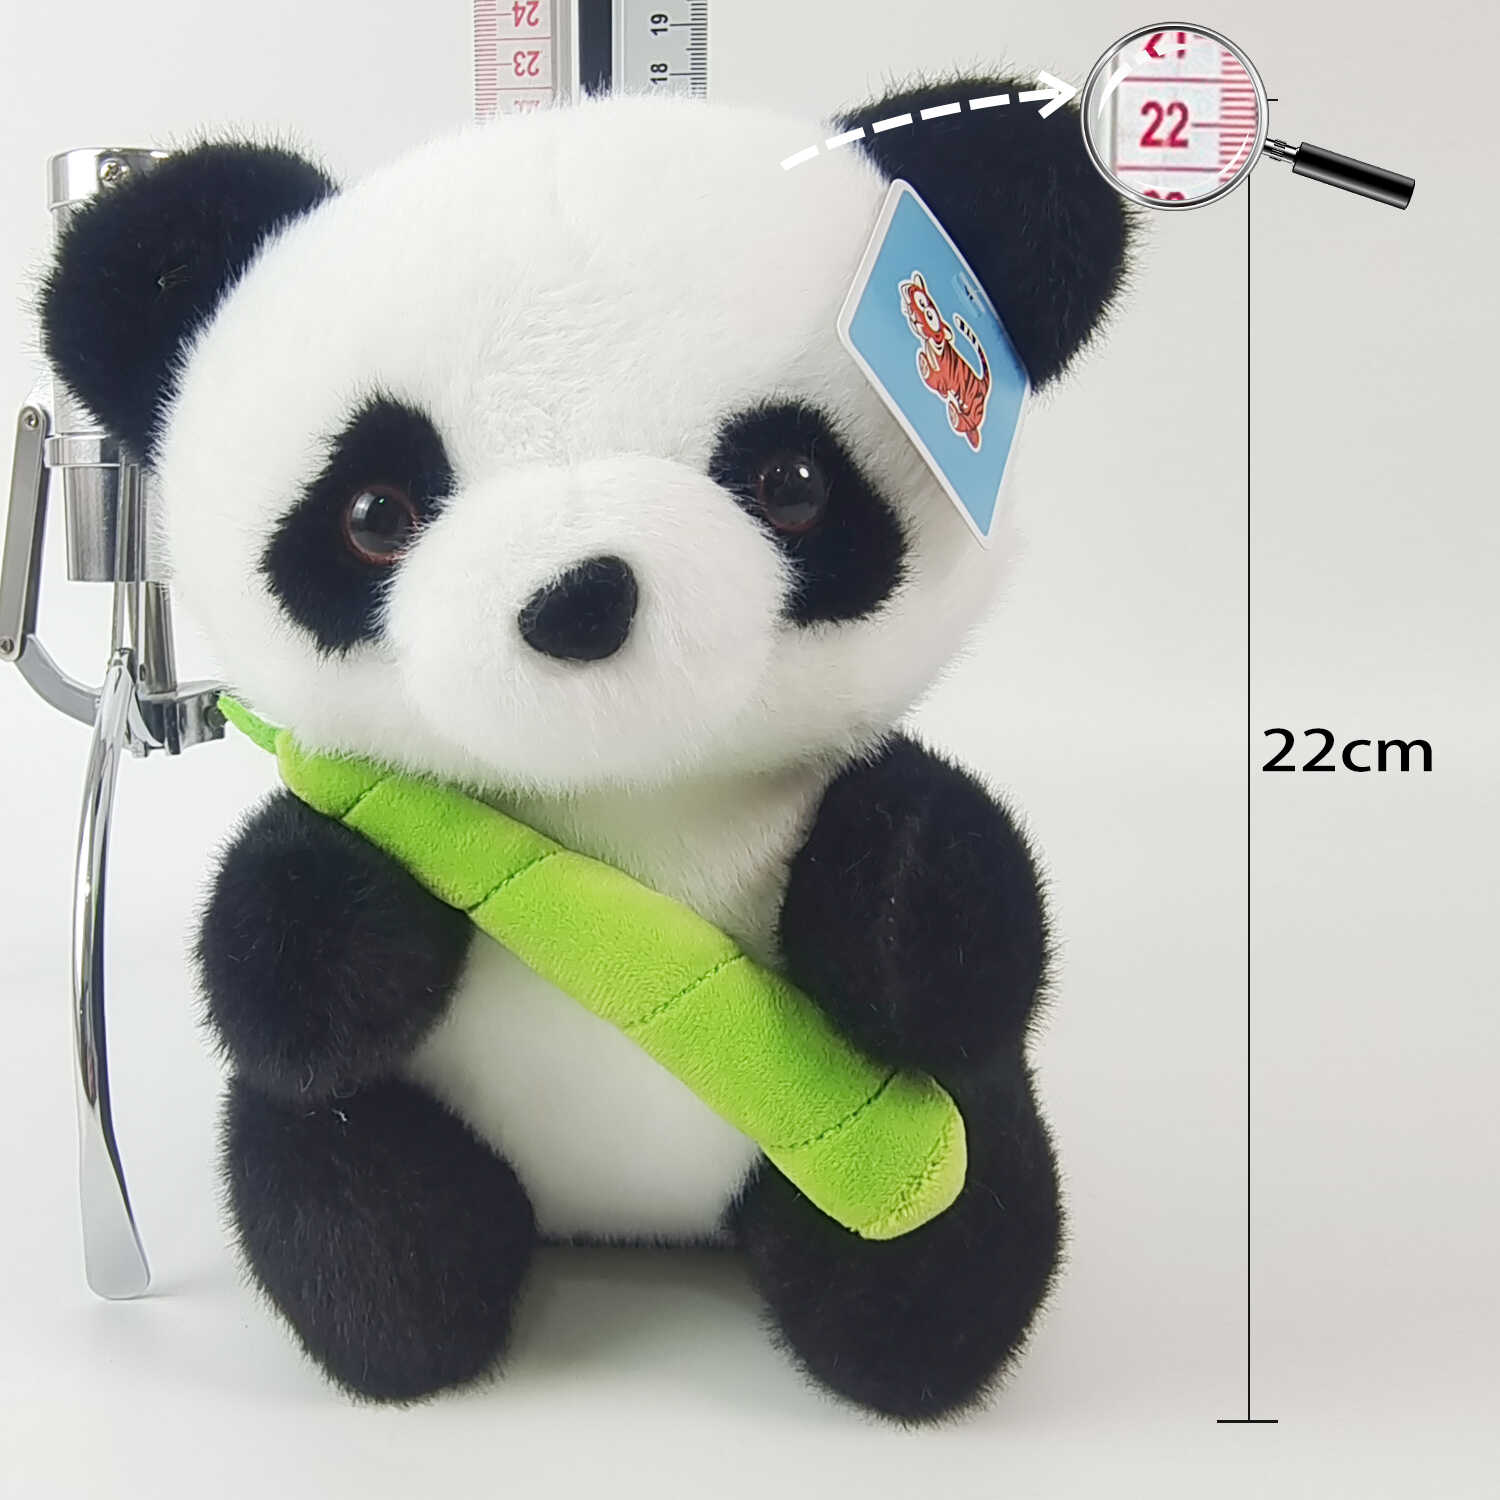 A04831 精品8寸 21cm 竹笋熊猫 